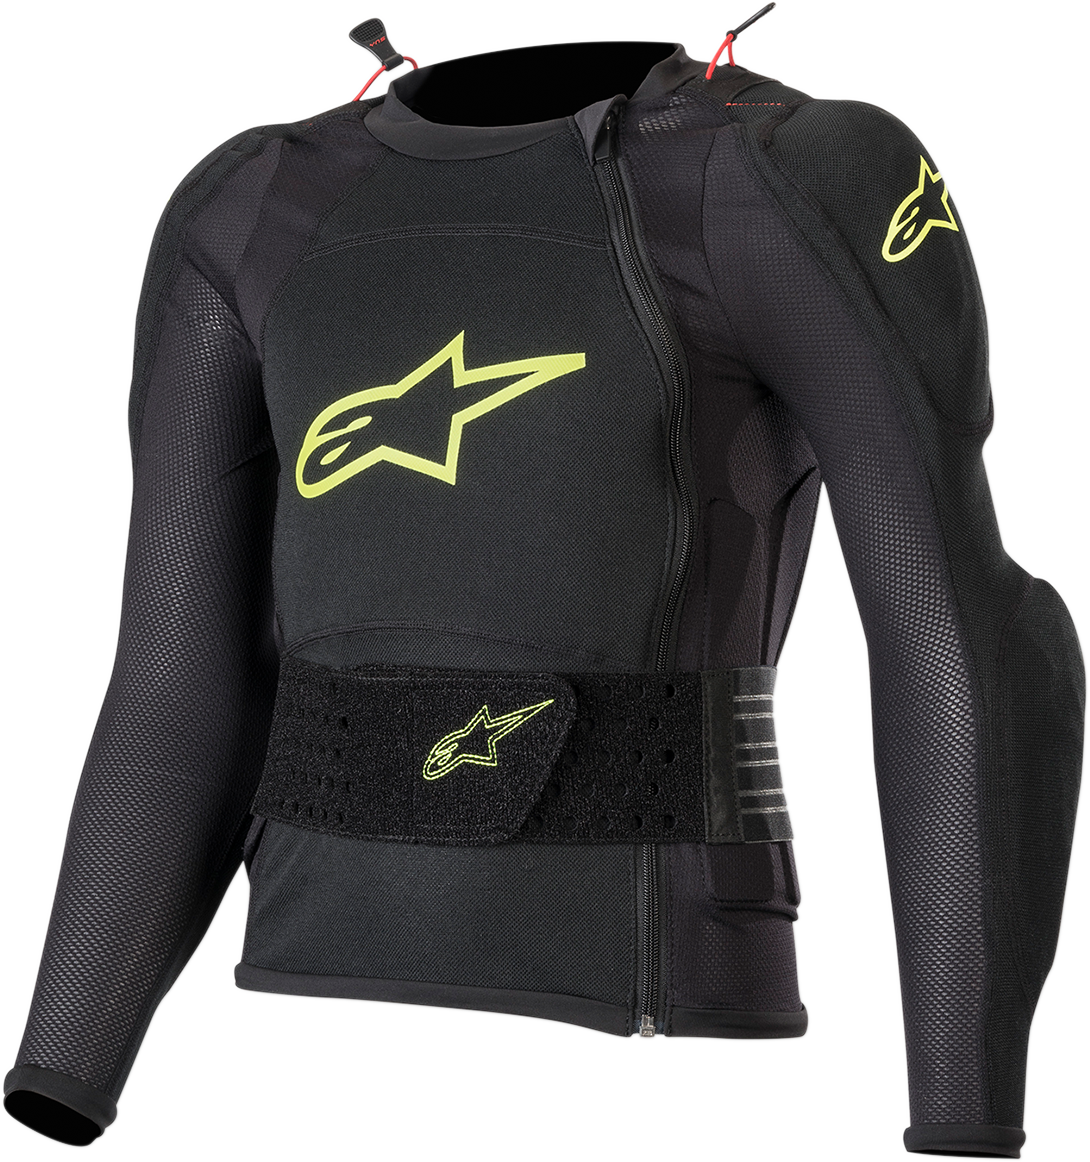 ALPINESTARS Youth Bionic Plus Protection Jacket - Black/Fluo Yellow - Small/Medium 6545620-155-S/M